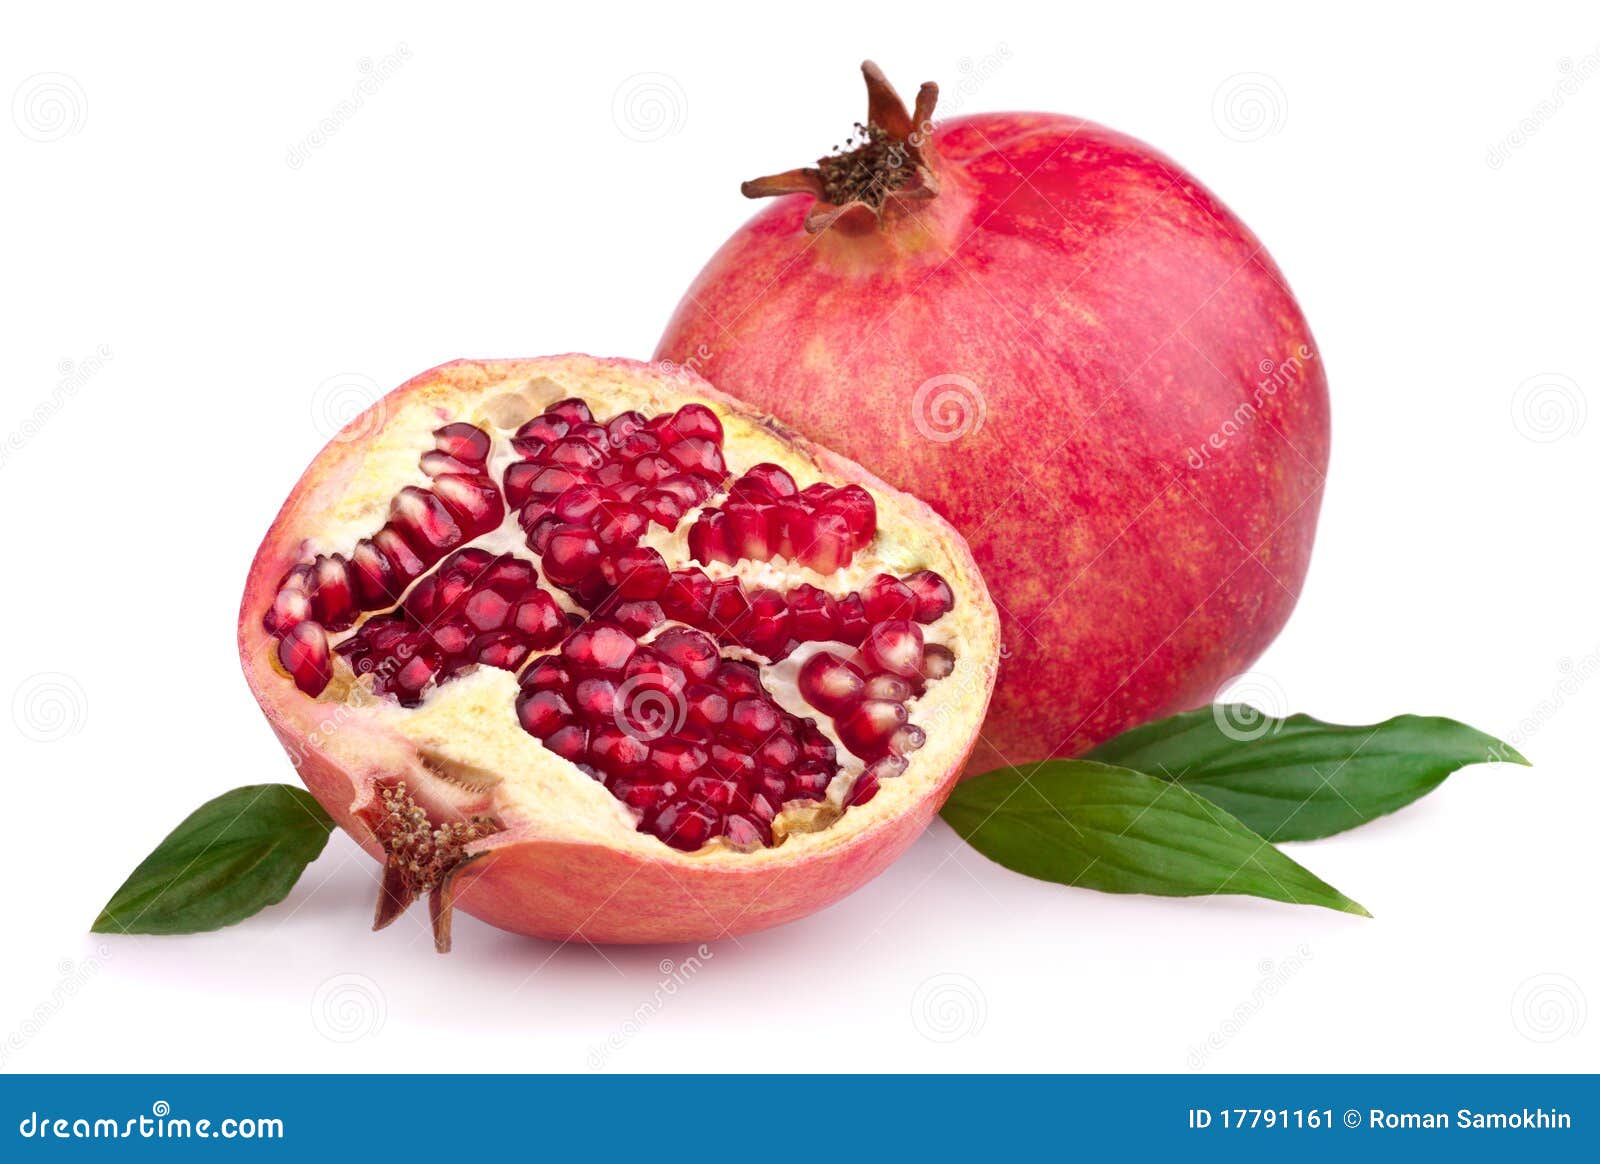 juicy pomegranate and half